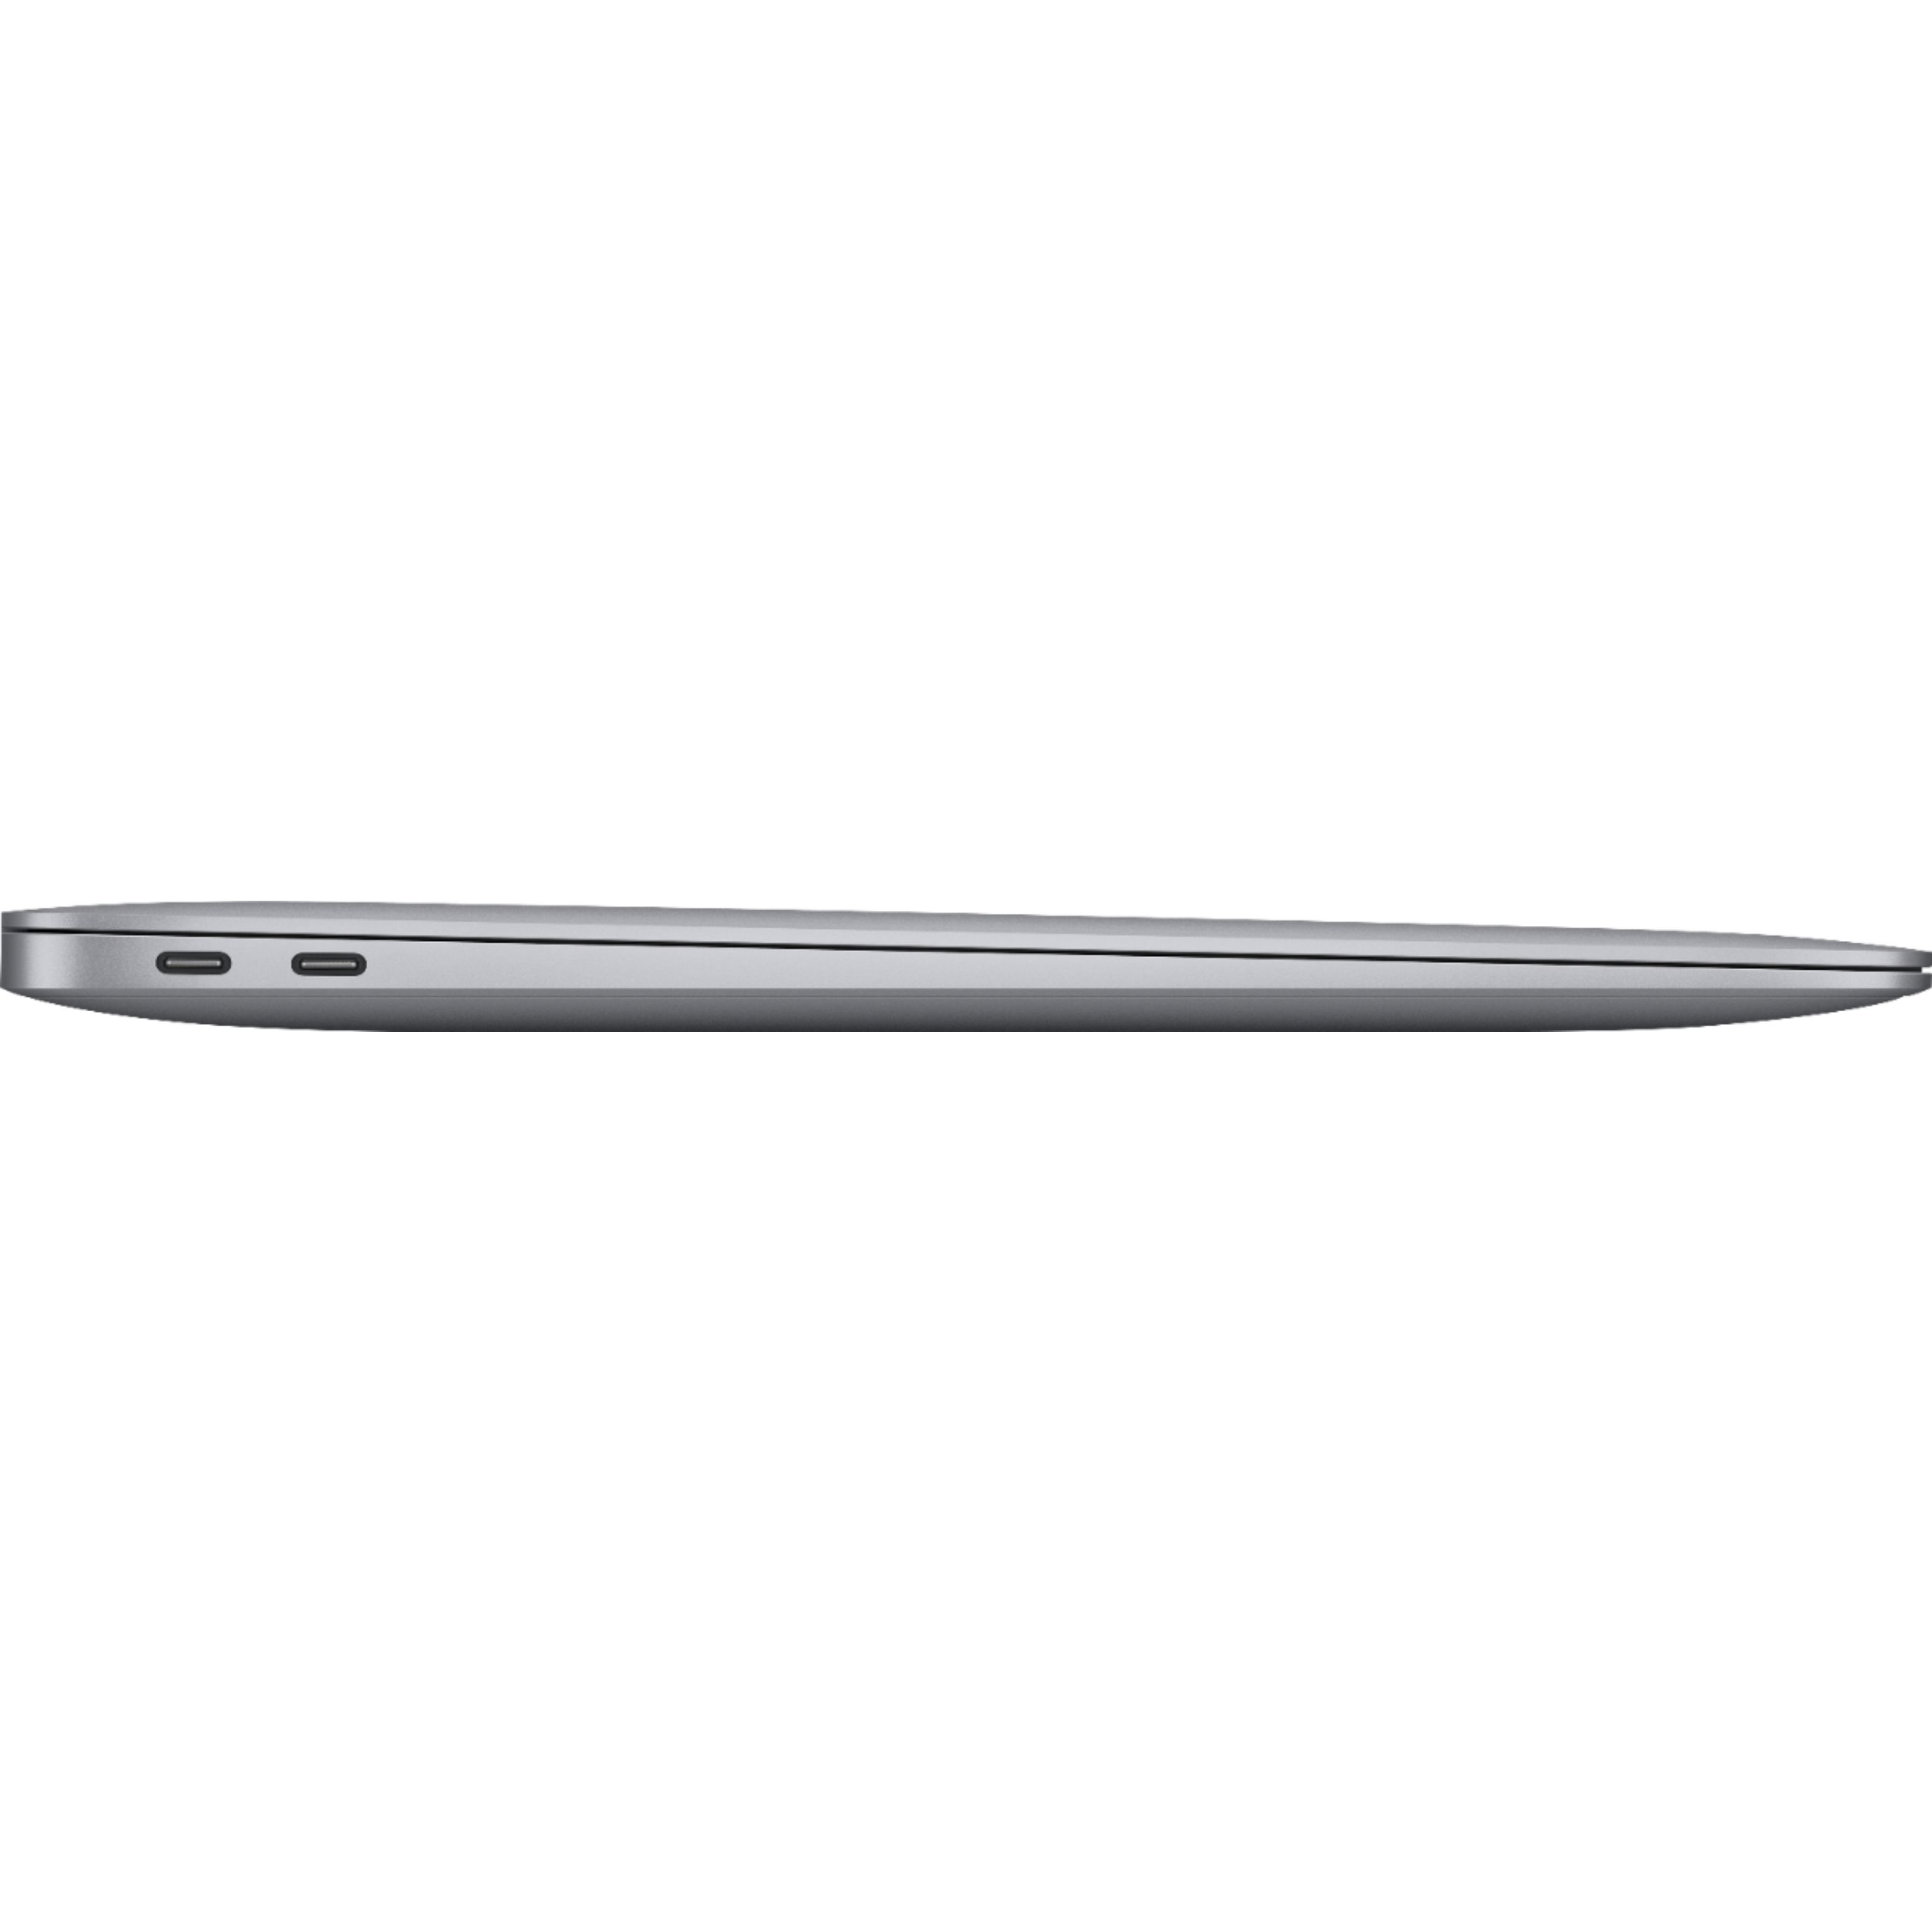 Apple MacBook Air 13-inch 1.1GHz i3 Dual-Core 8GB RAM 256GB SSD (Space